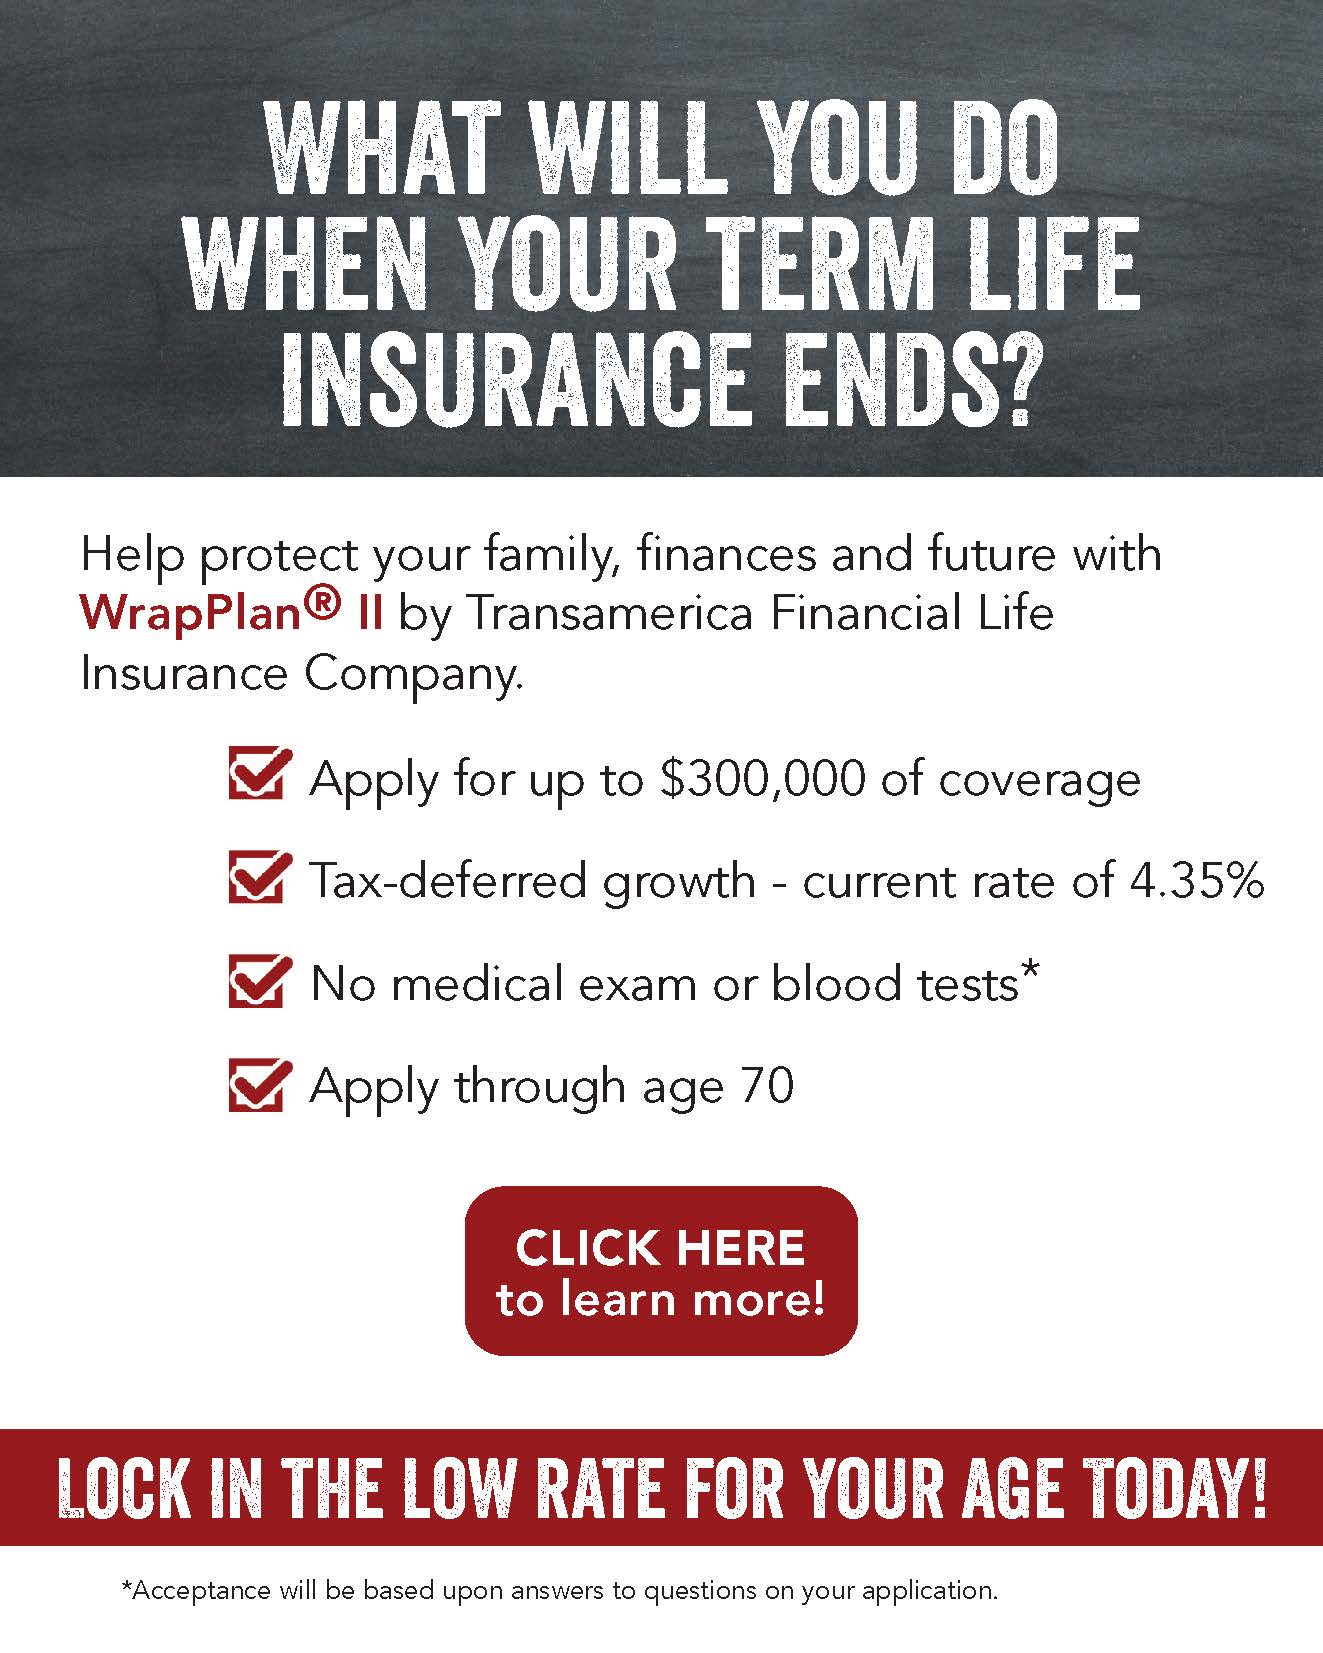 WrapPlan II Universal Life Insurance Plan